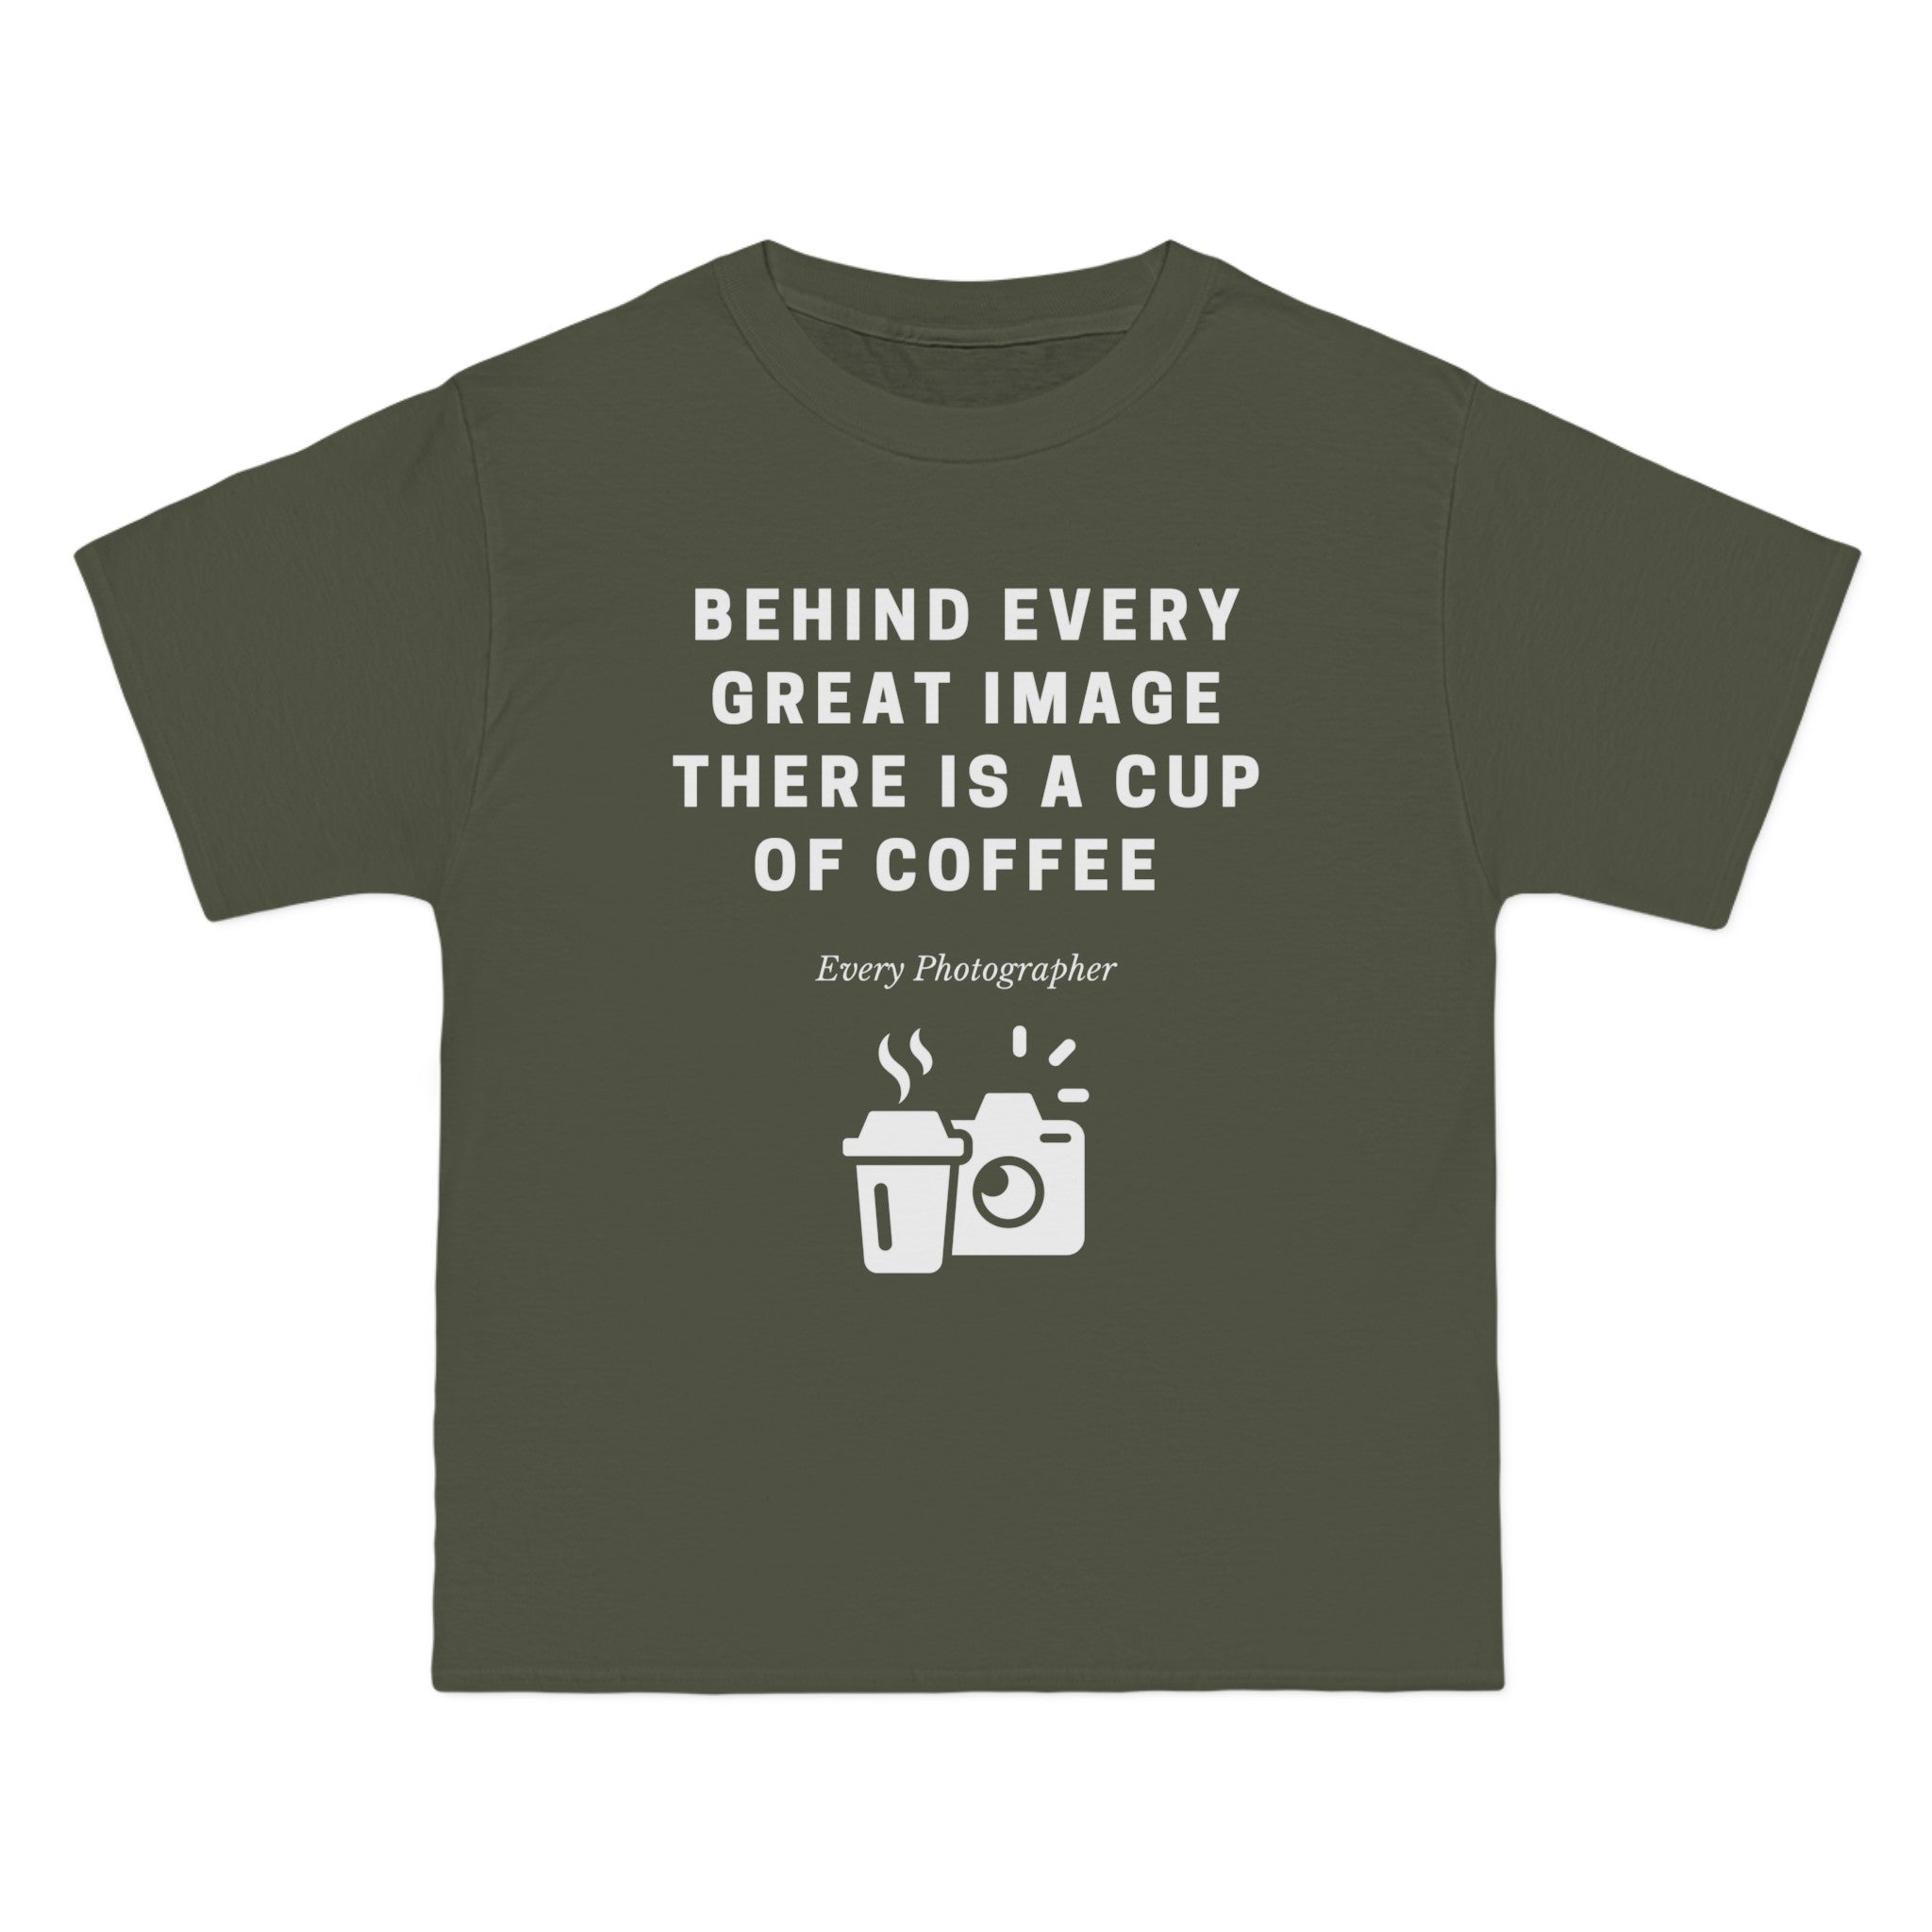 Photography Humor Beefy Short-Sleeve T-Shirts